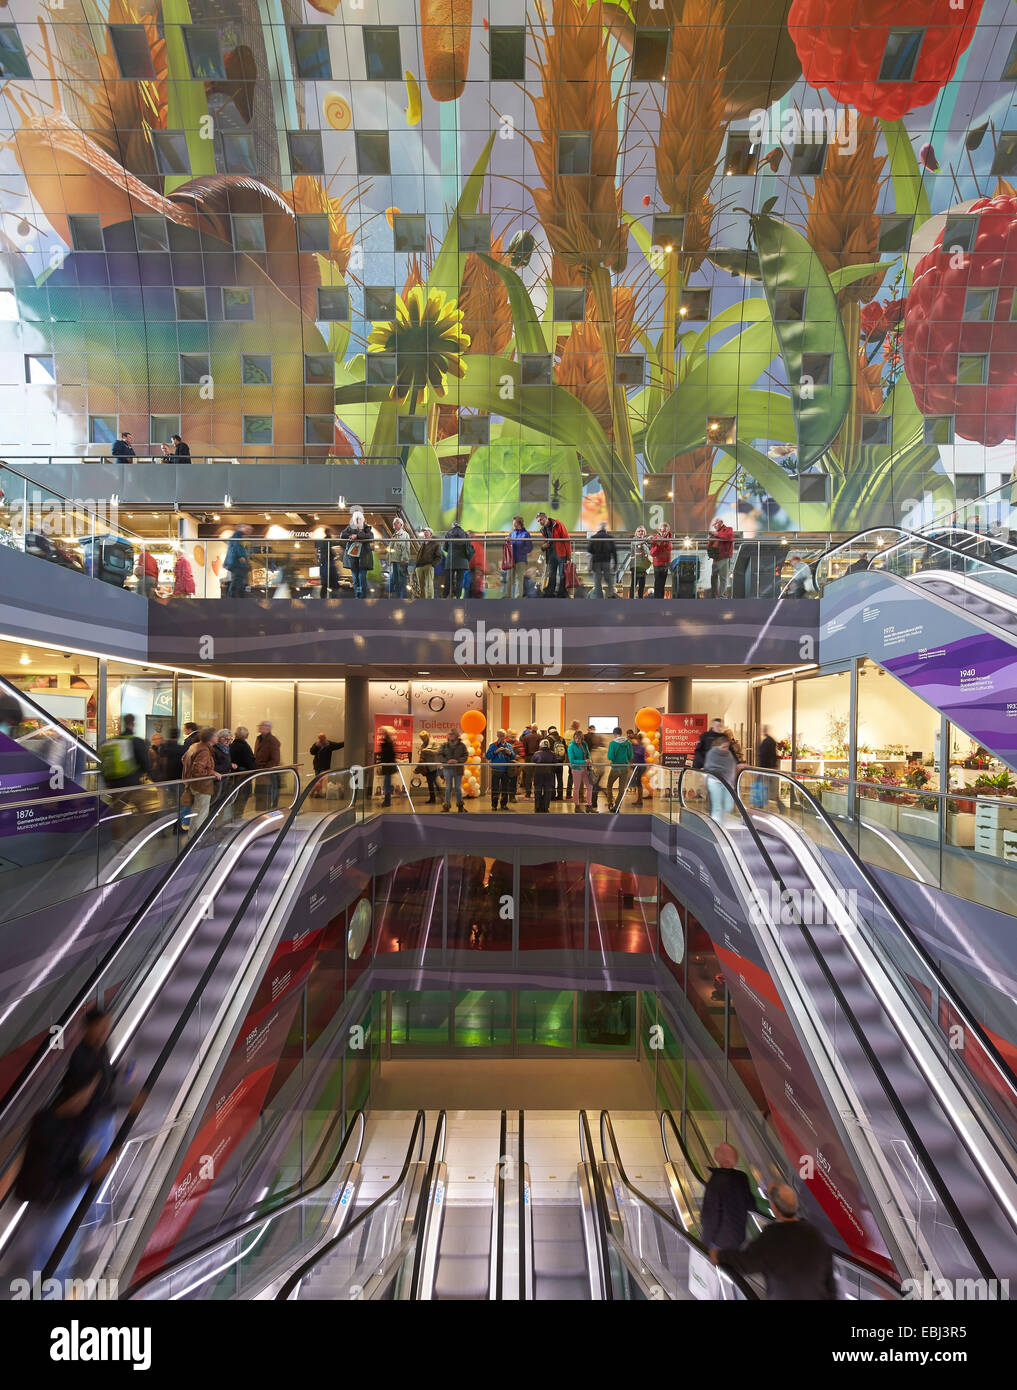 Market Hall Rotterdam, Rotterdam, Netherlands. Architect: MVRDV, 2014. Hall interior with escalators and curious crowd. Stock Photo